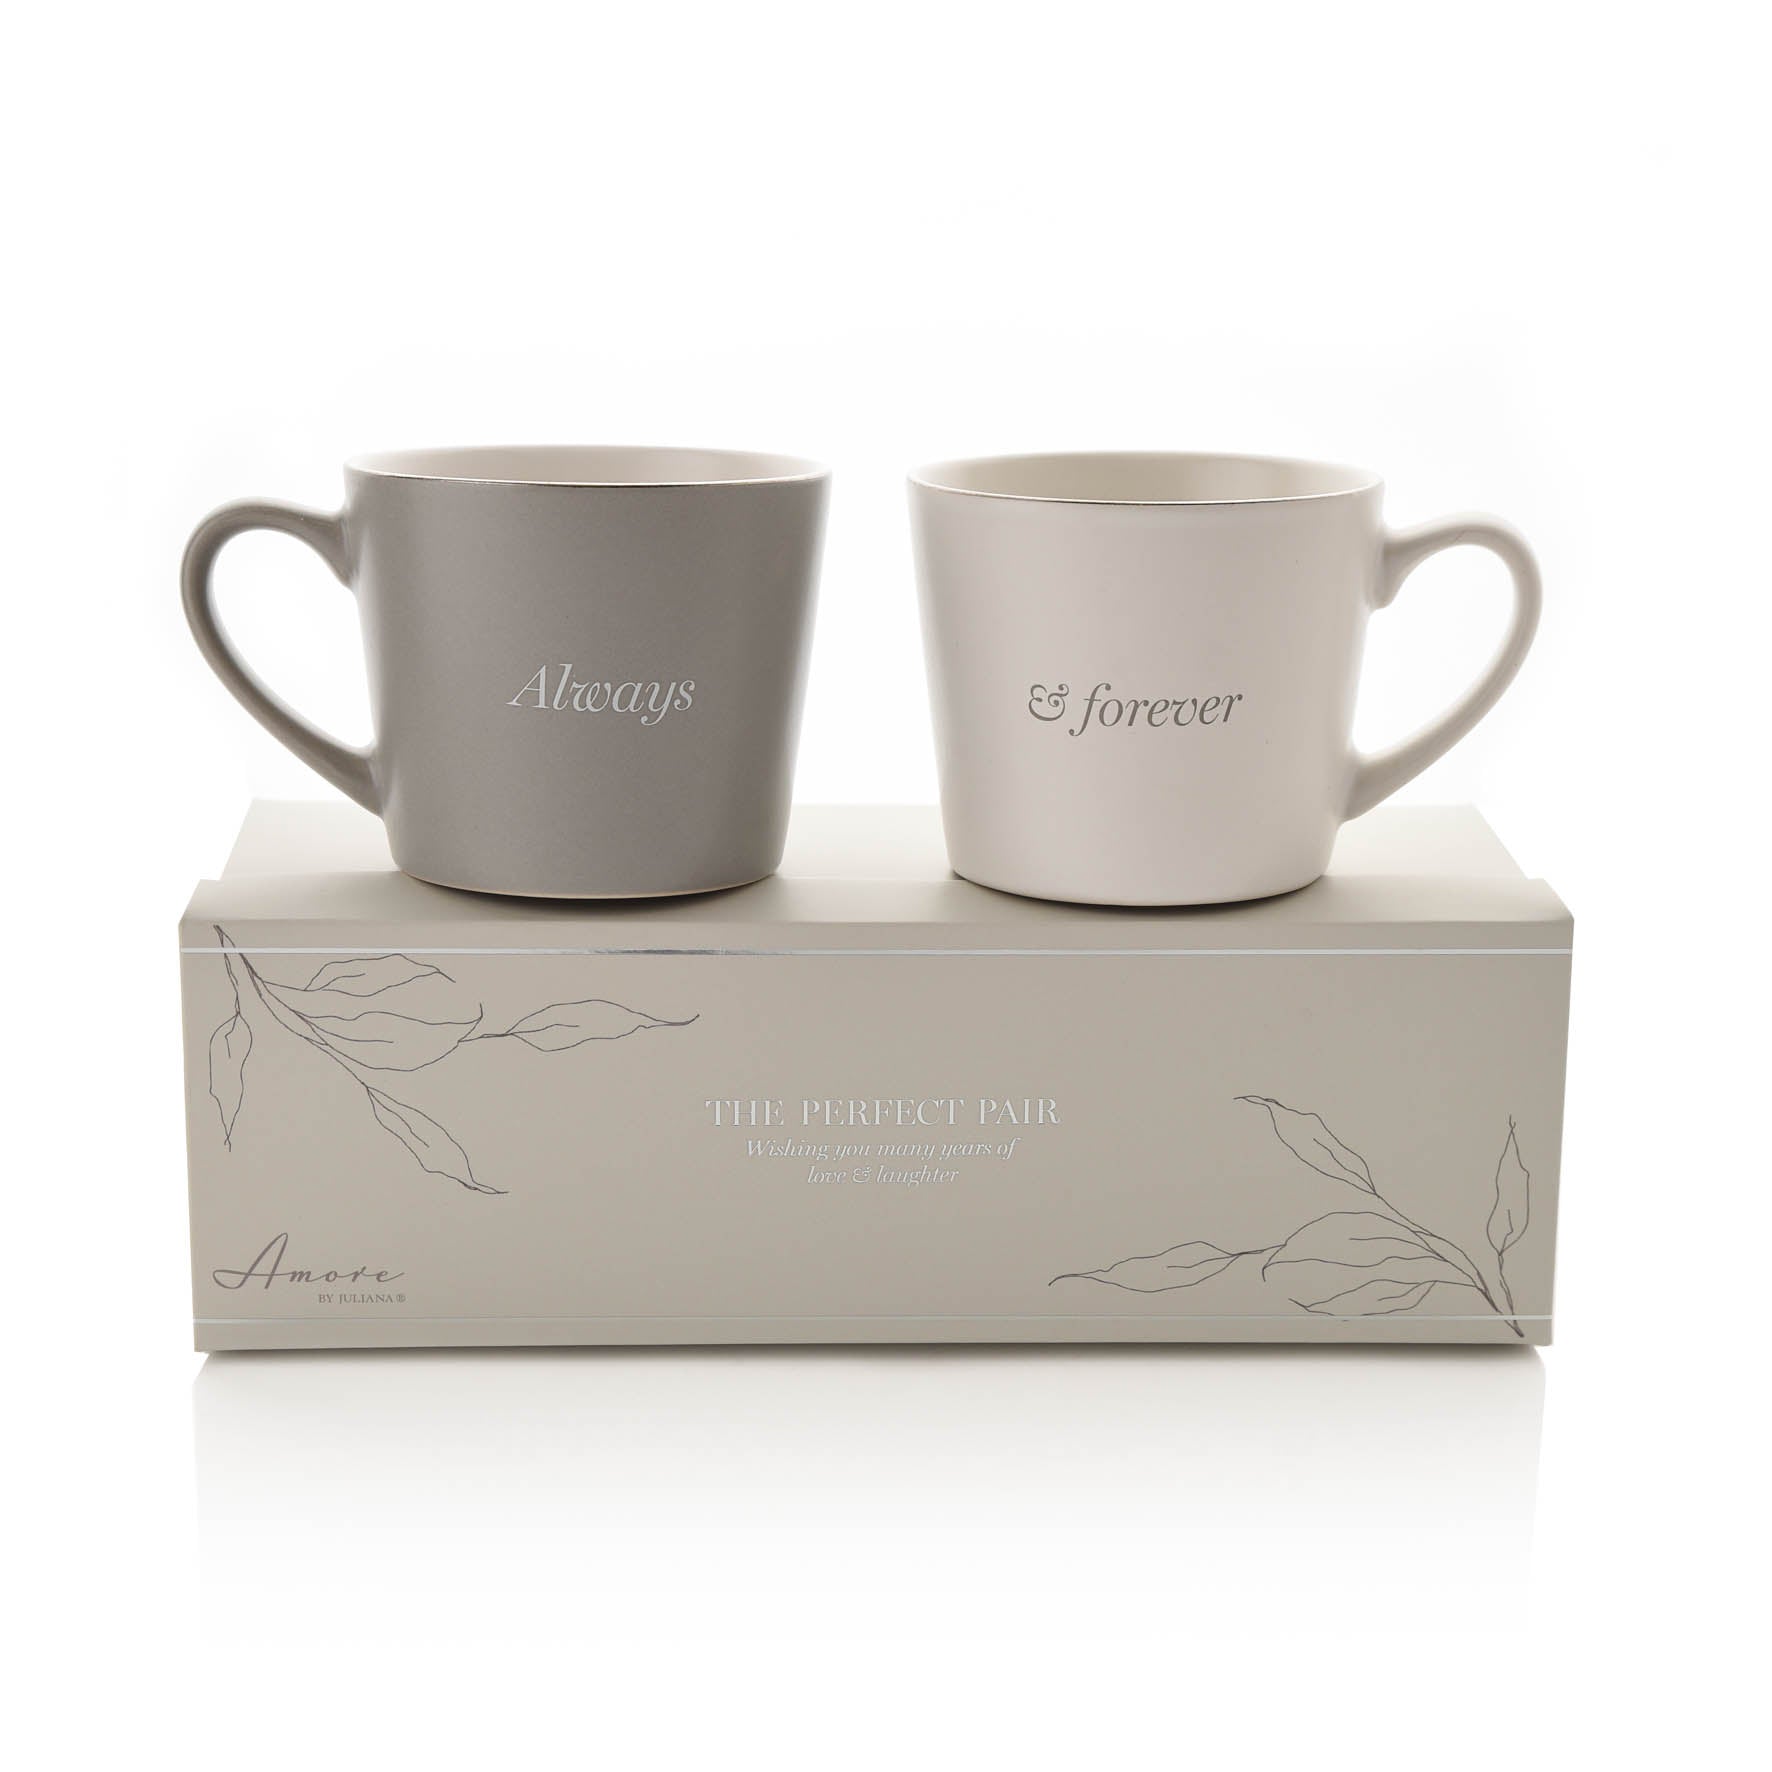 Amore Set Of 2 Grey & White Mugs - Always & Forever